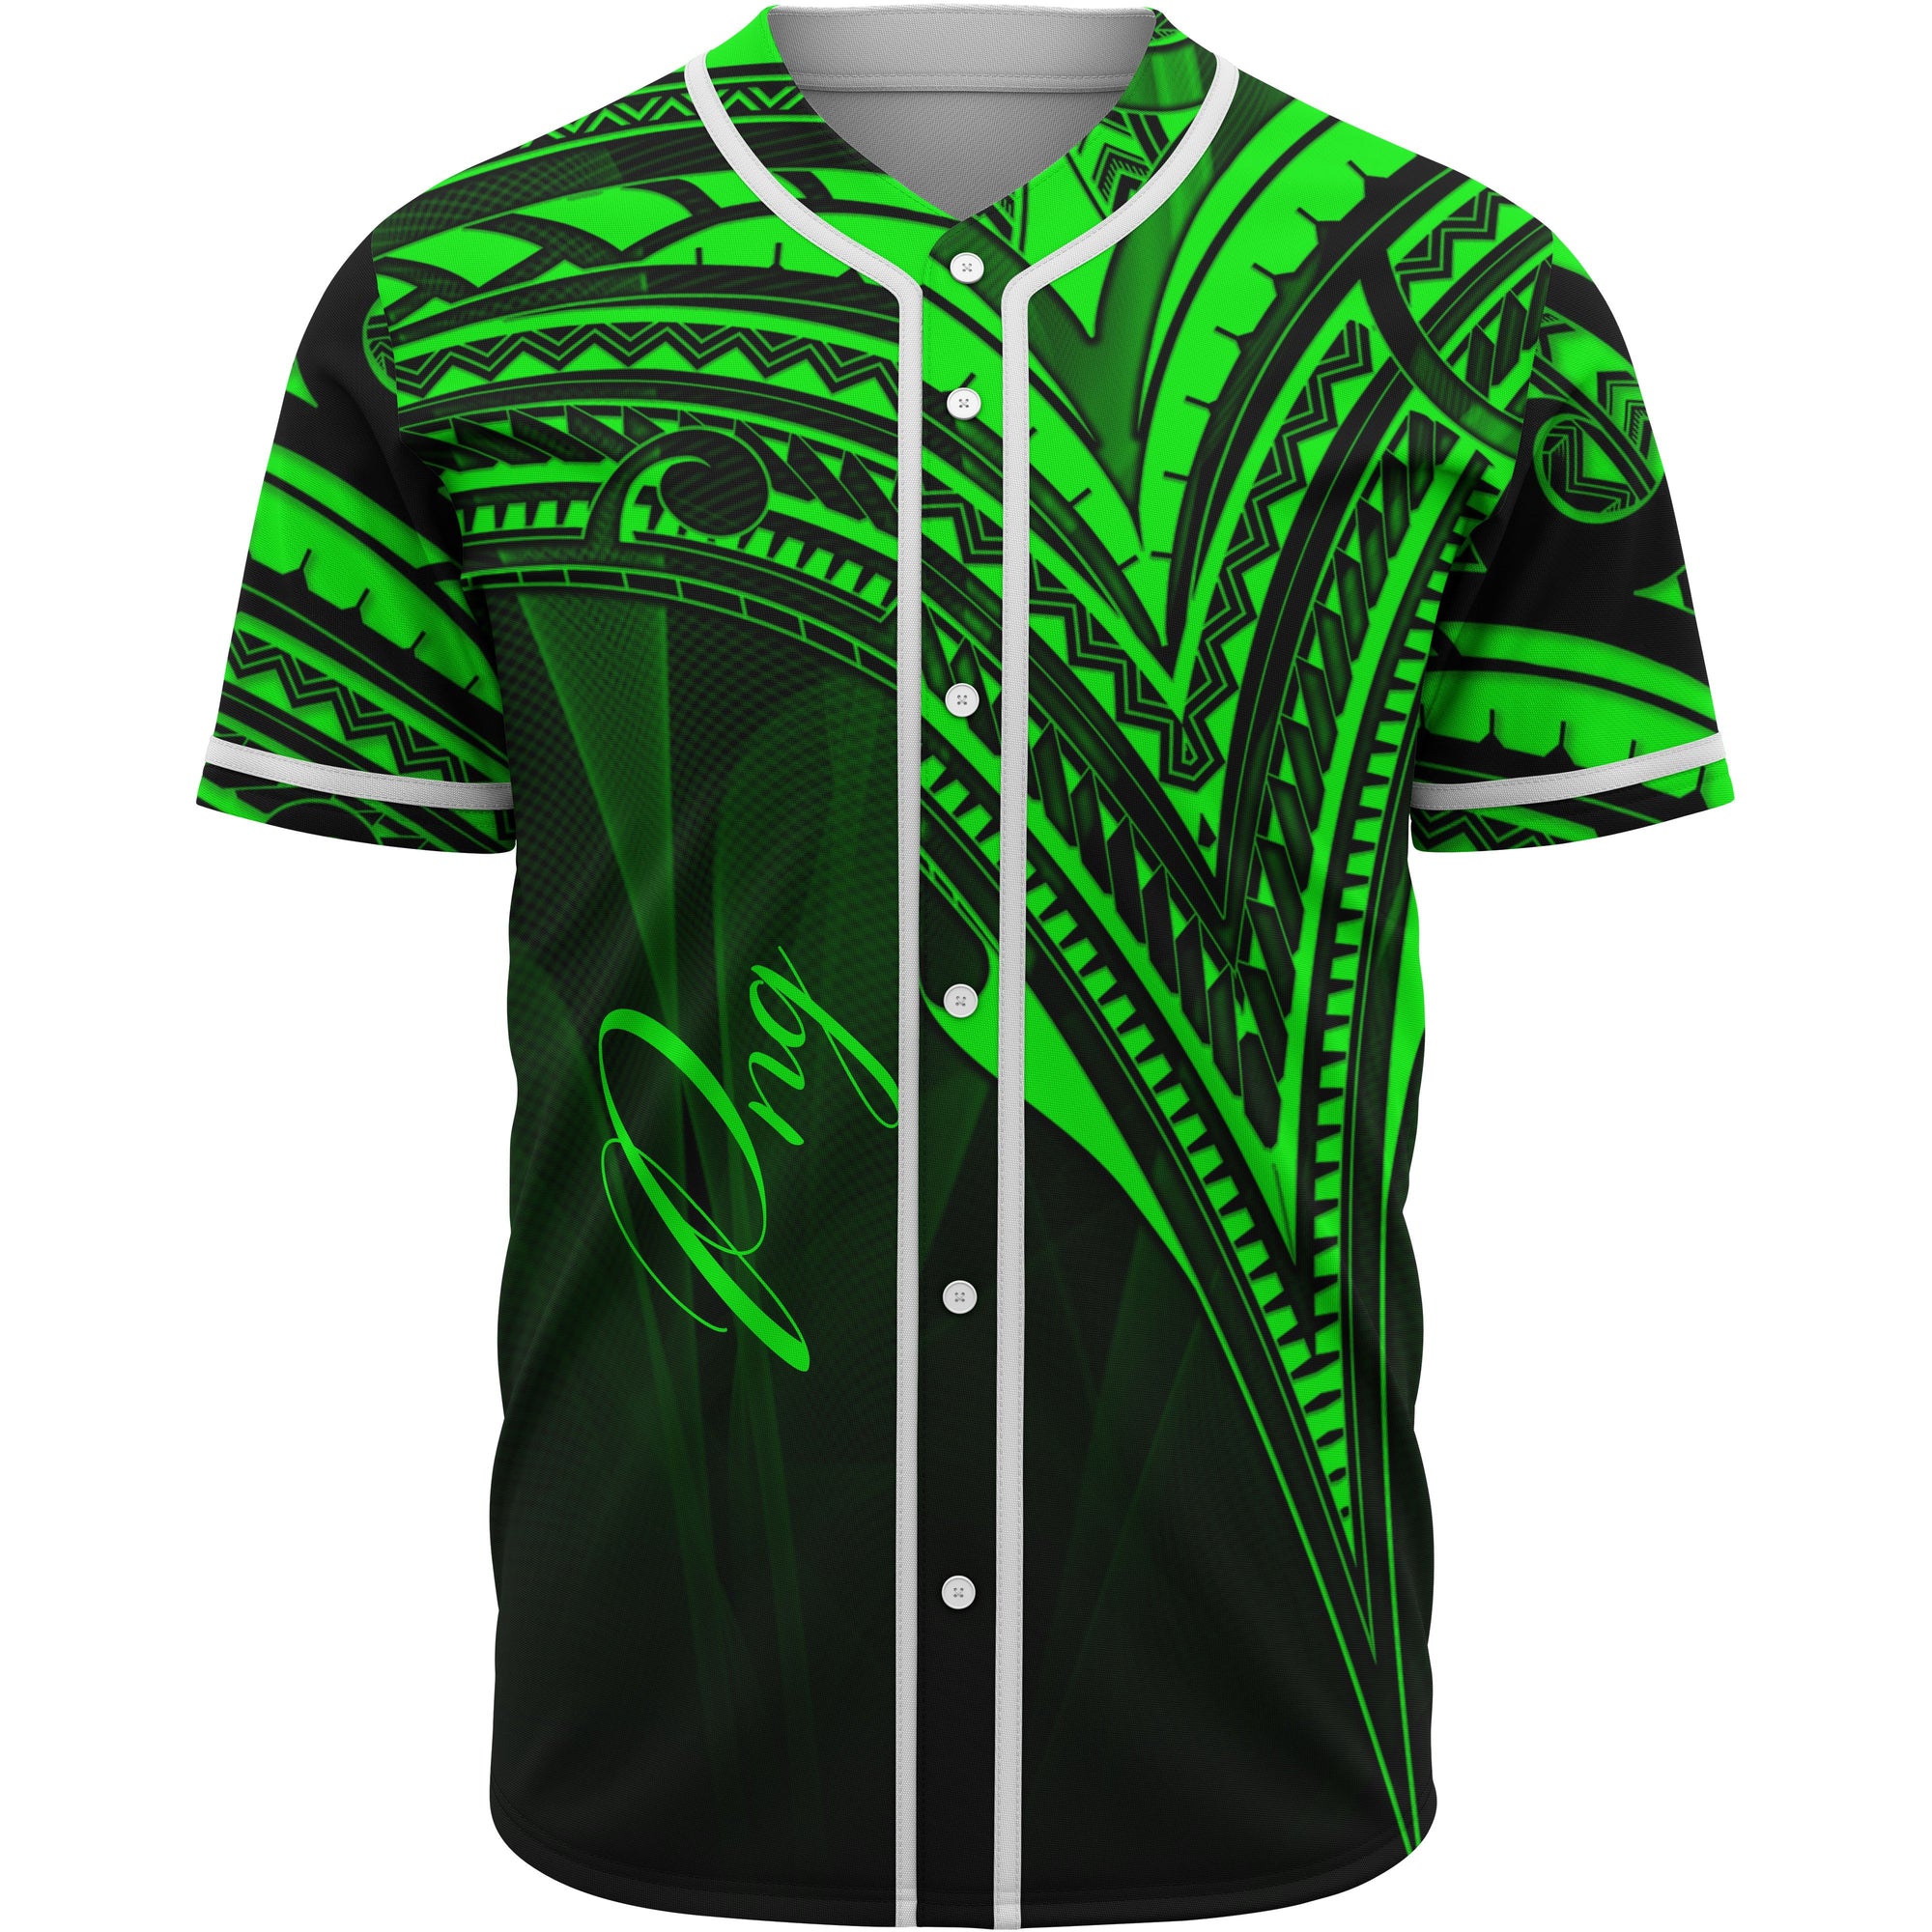 Papua New Guinea Baseball Shirt - Green Color Cross Style Unisex Black - Polynesian Pride